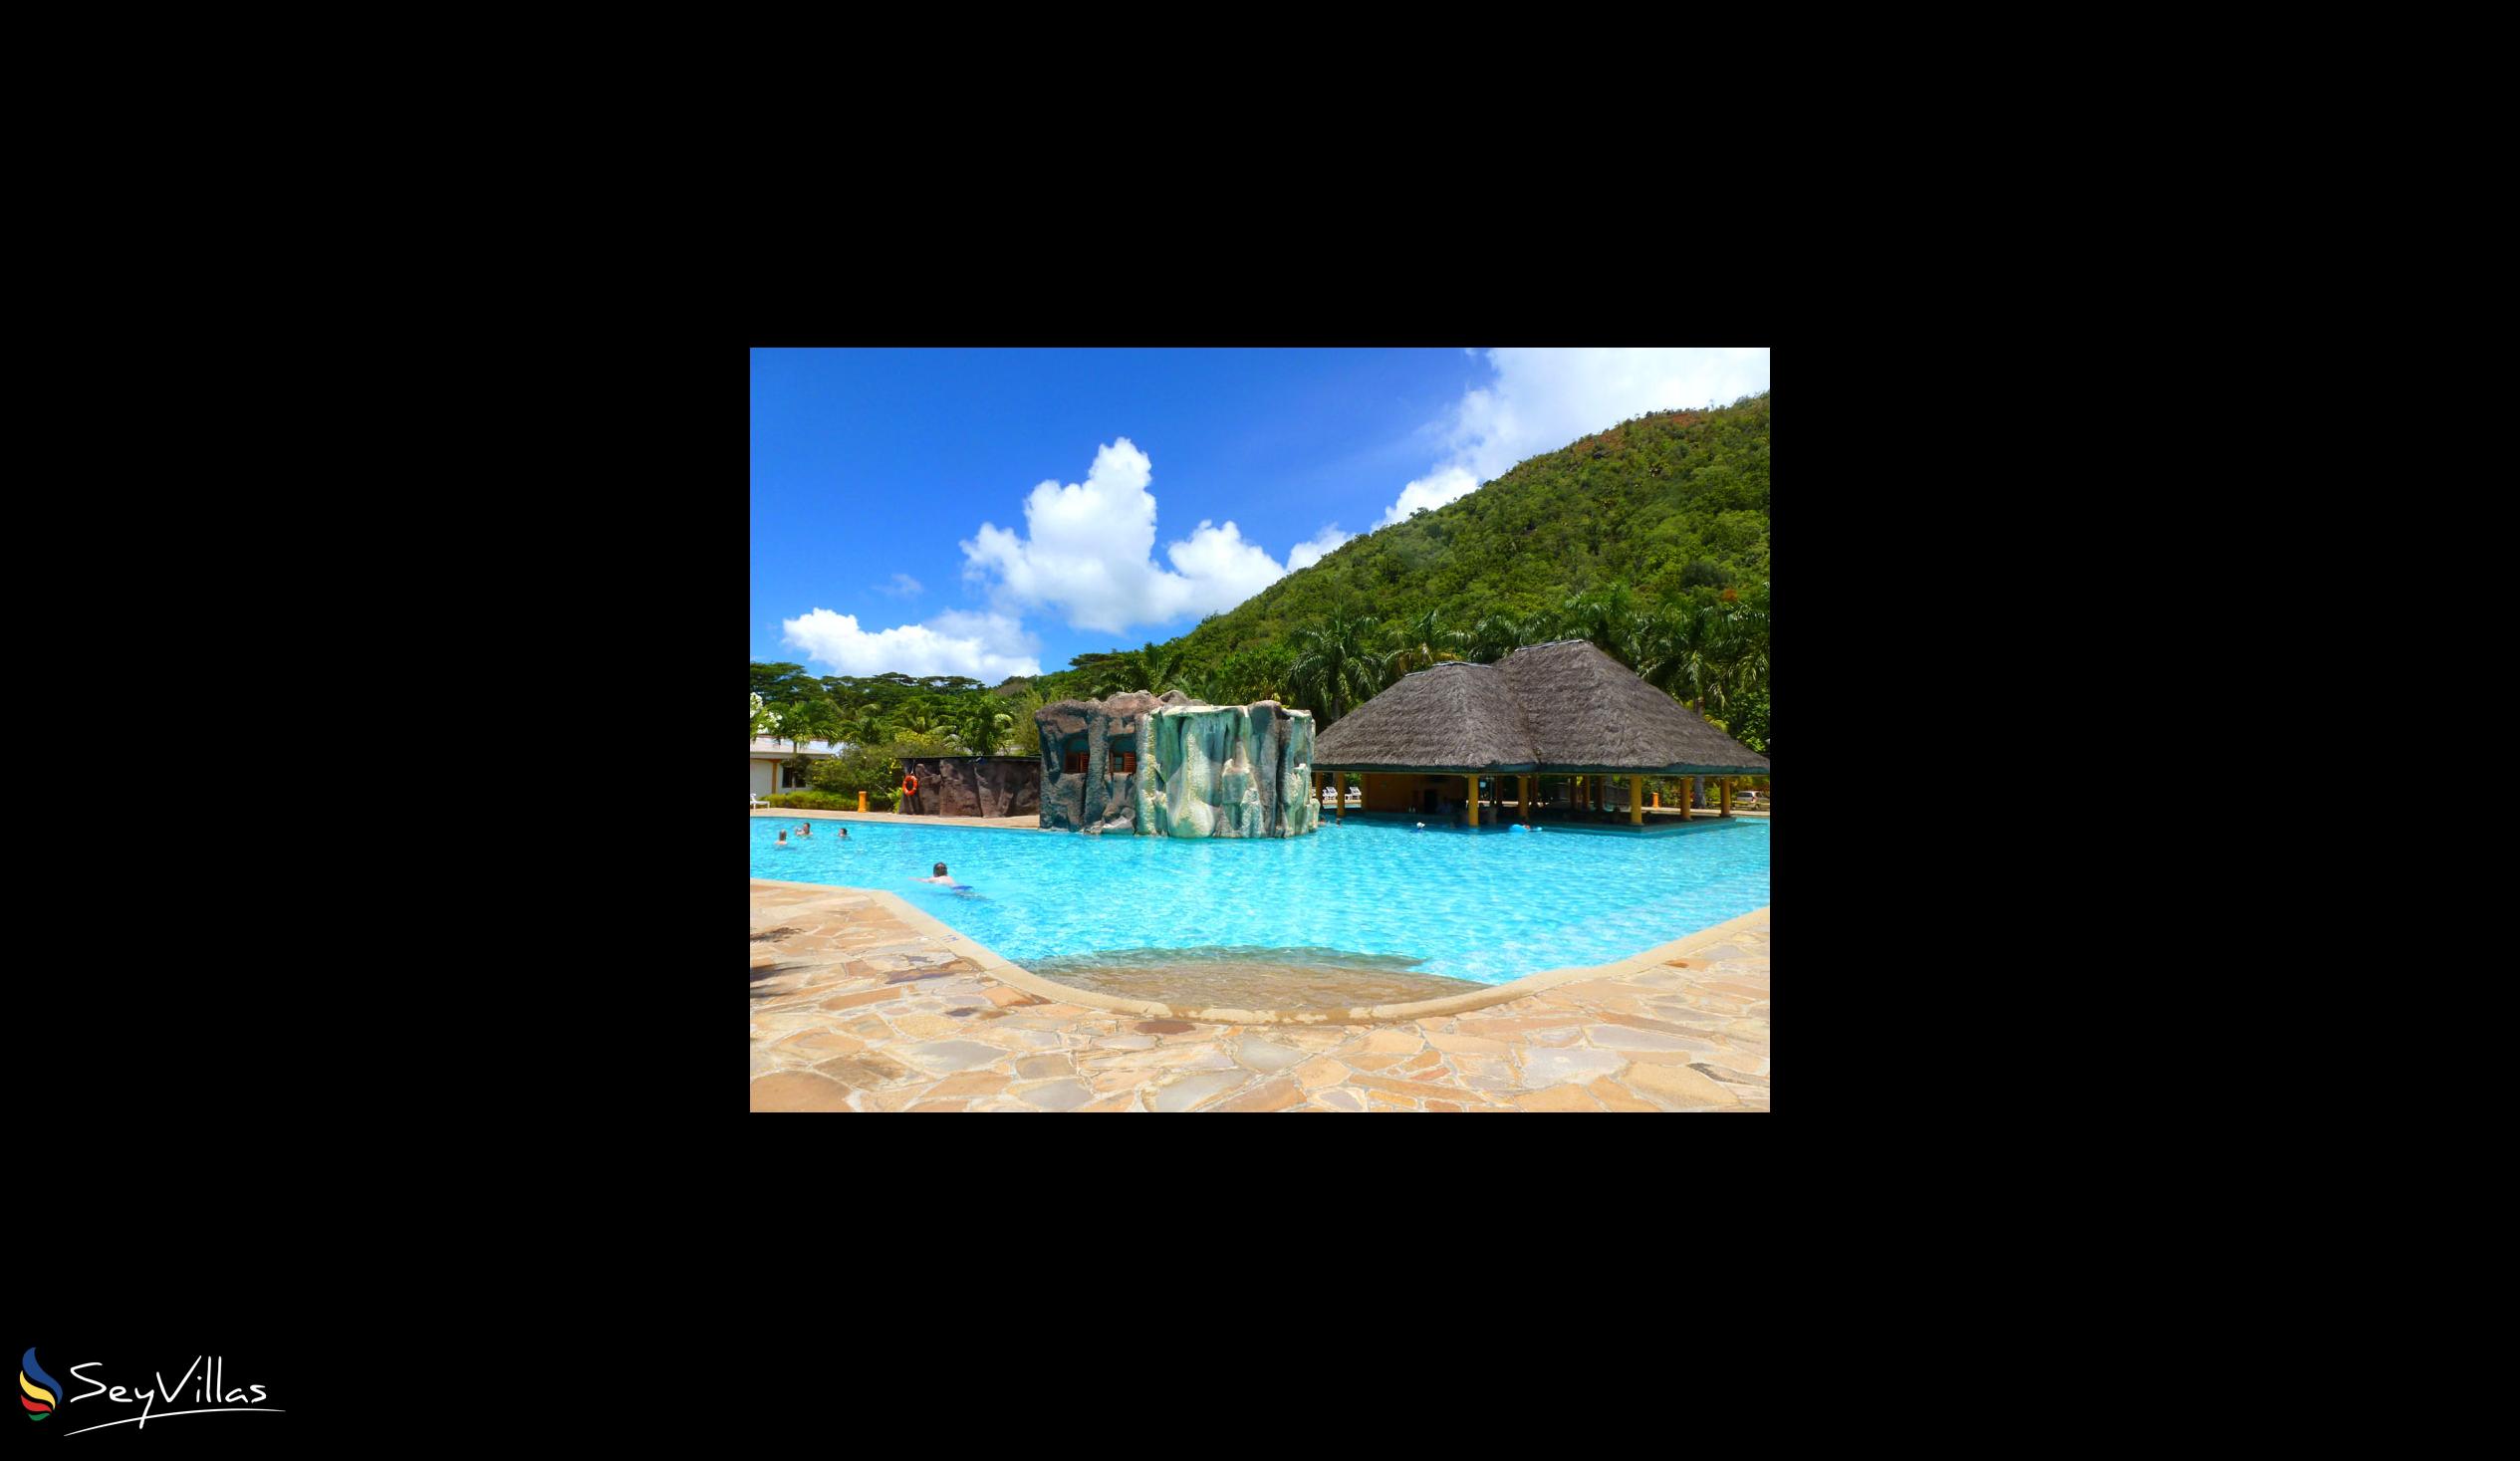 Photo 10: Le Domaine de La Reserve - Outdoor area - Praslin (Seychelles)